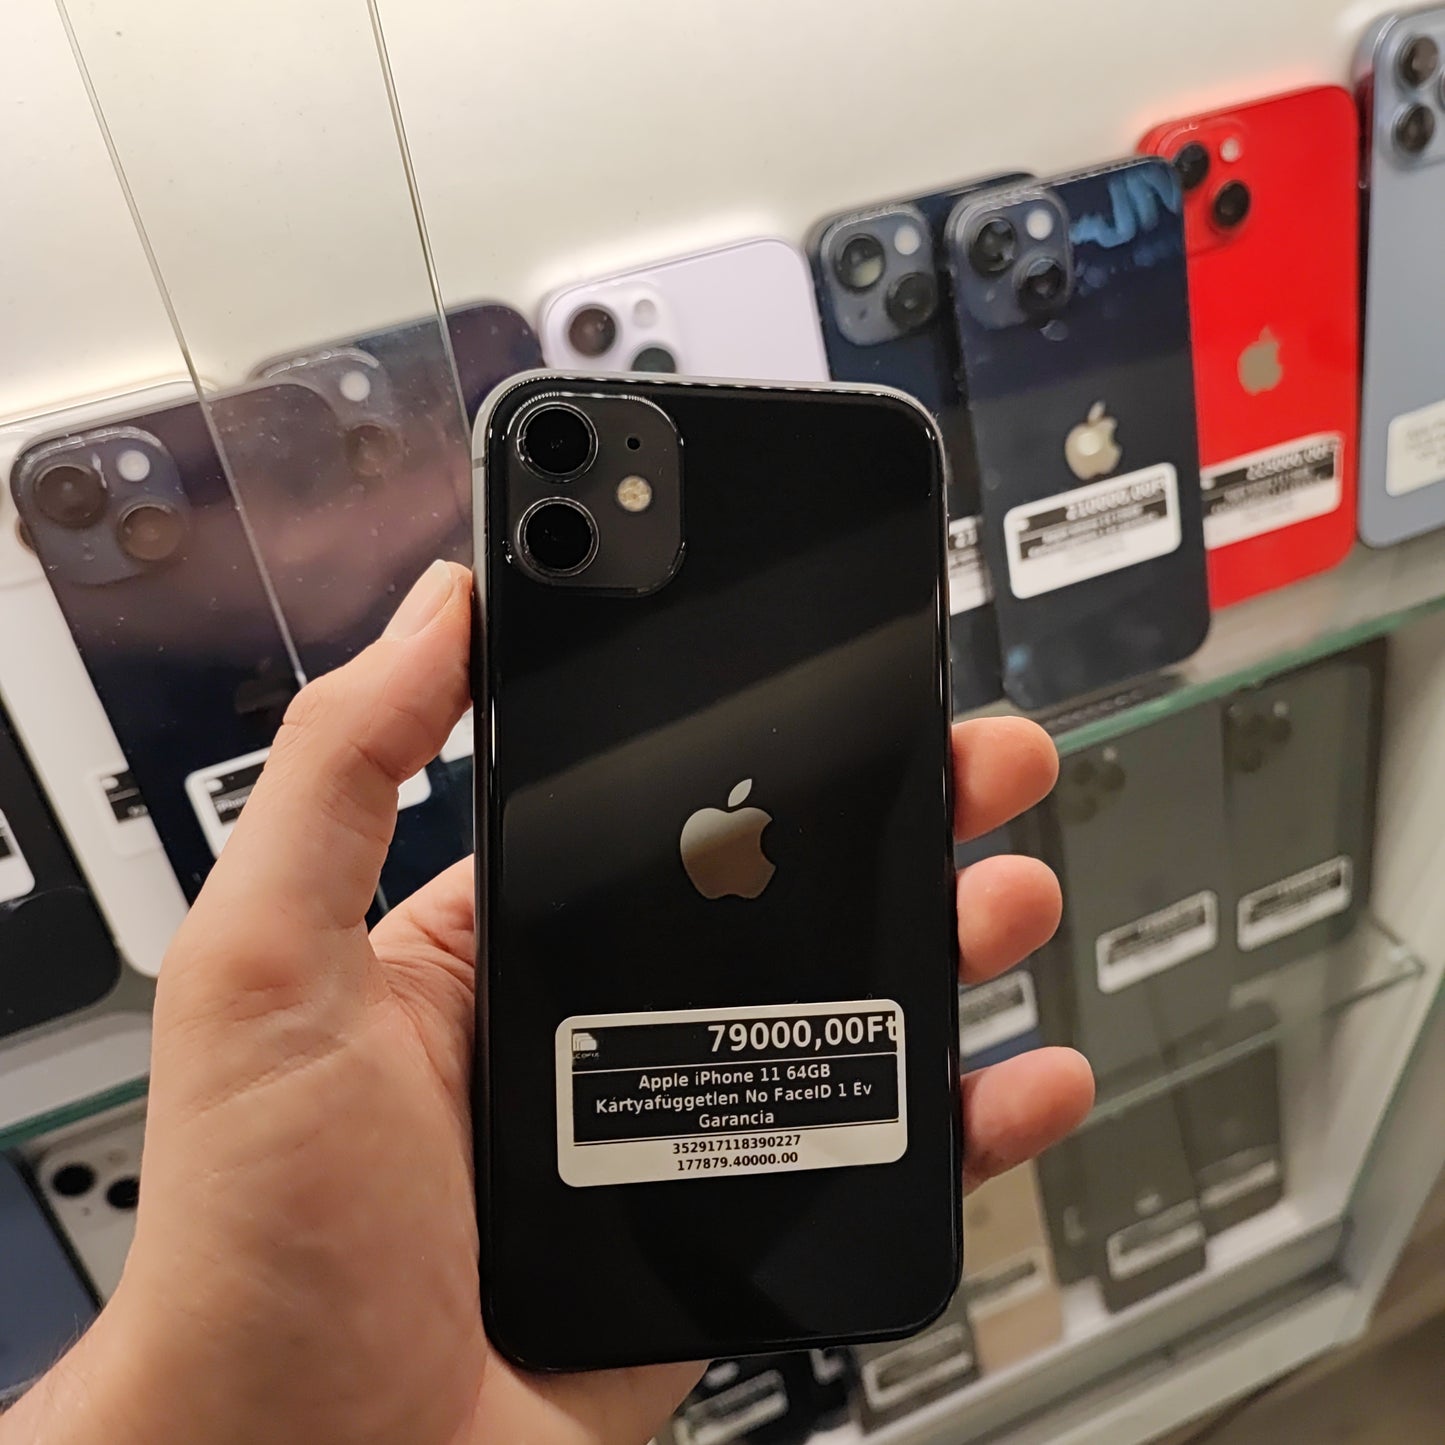 Apple iPhone 11 64GB Kártyafüggetlen No FaceID 1 Év Garancia